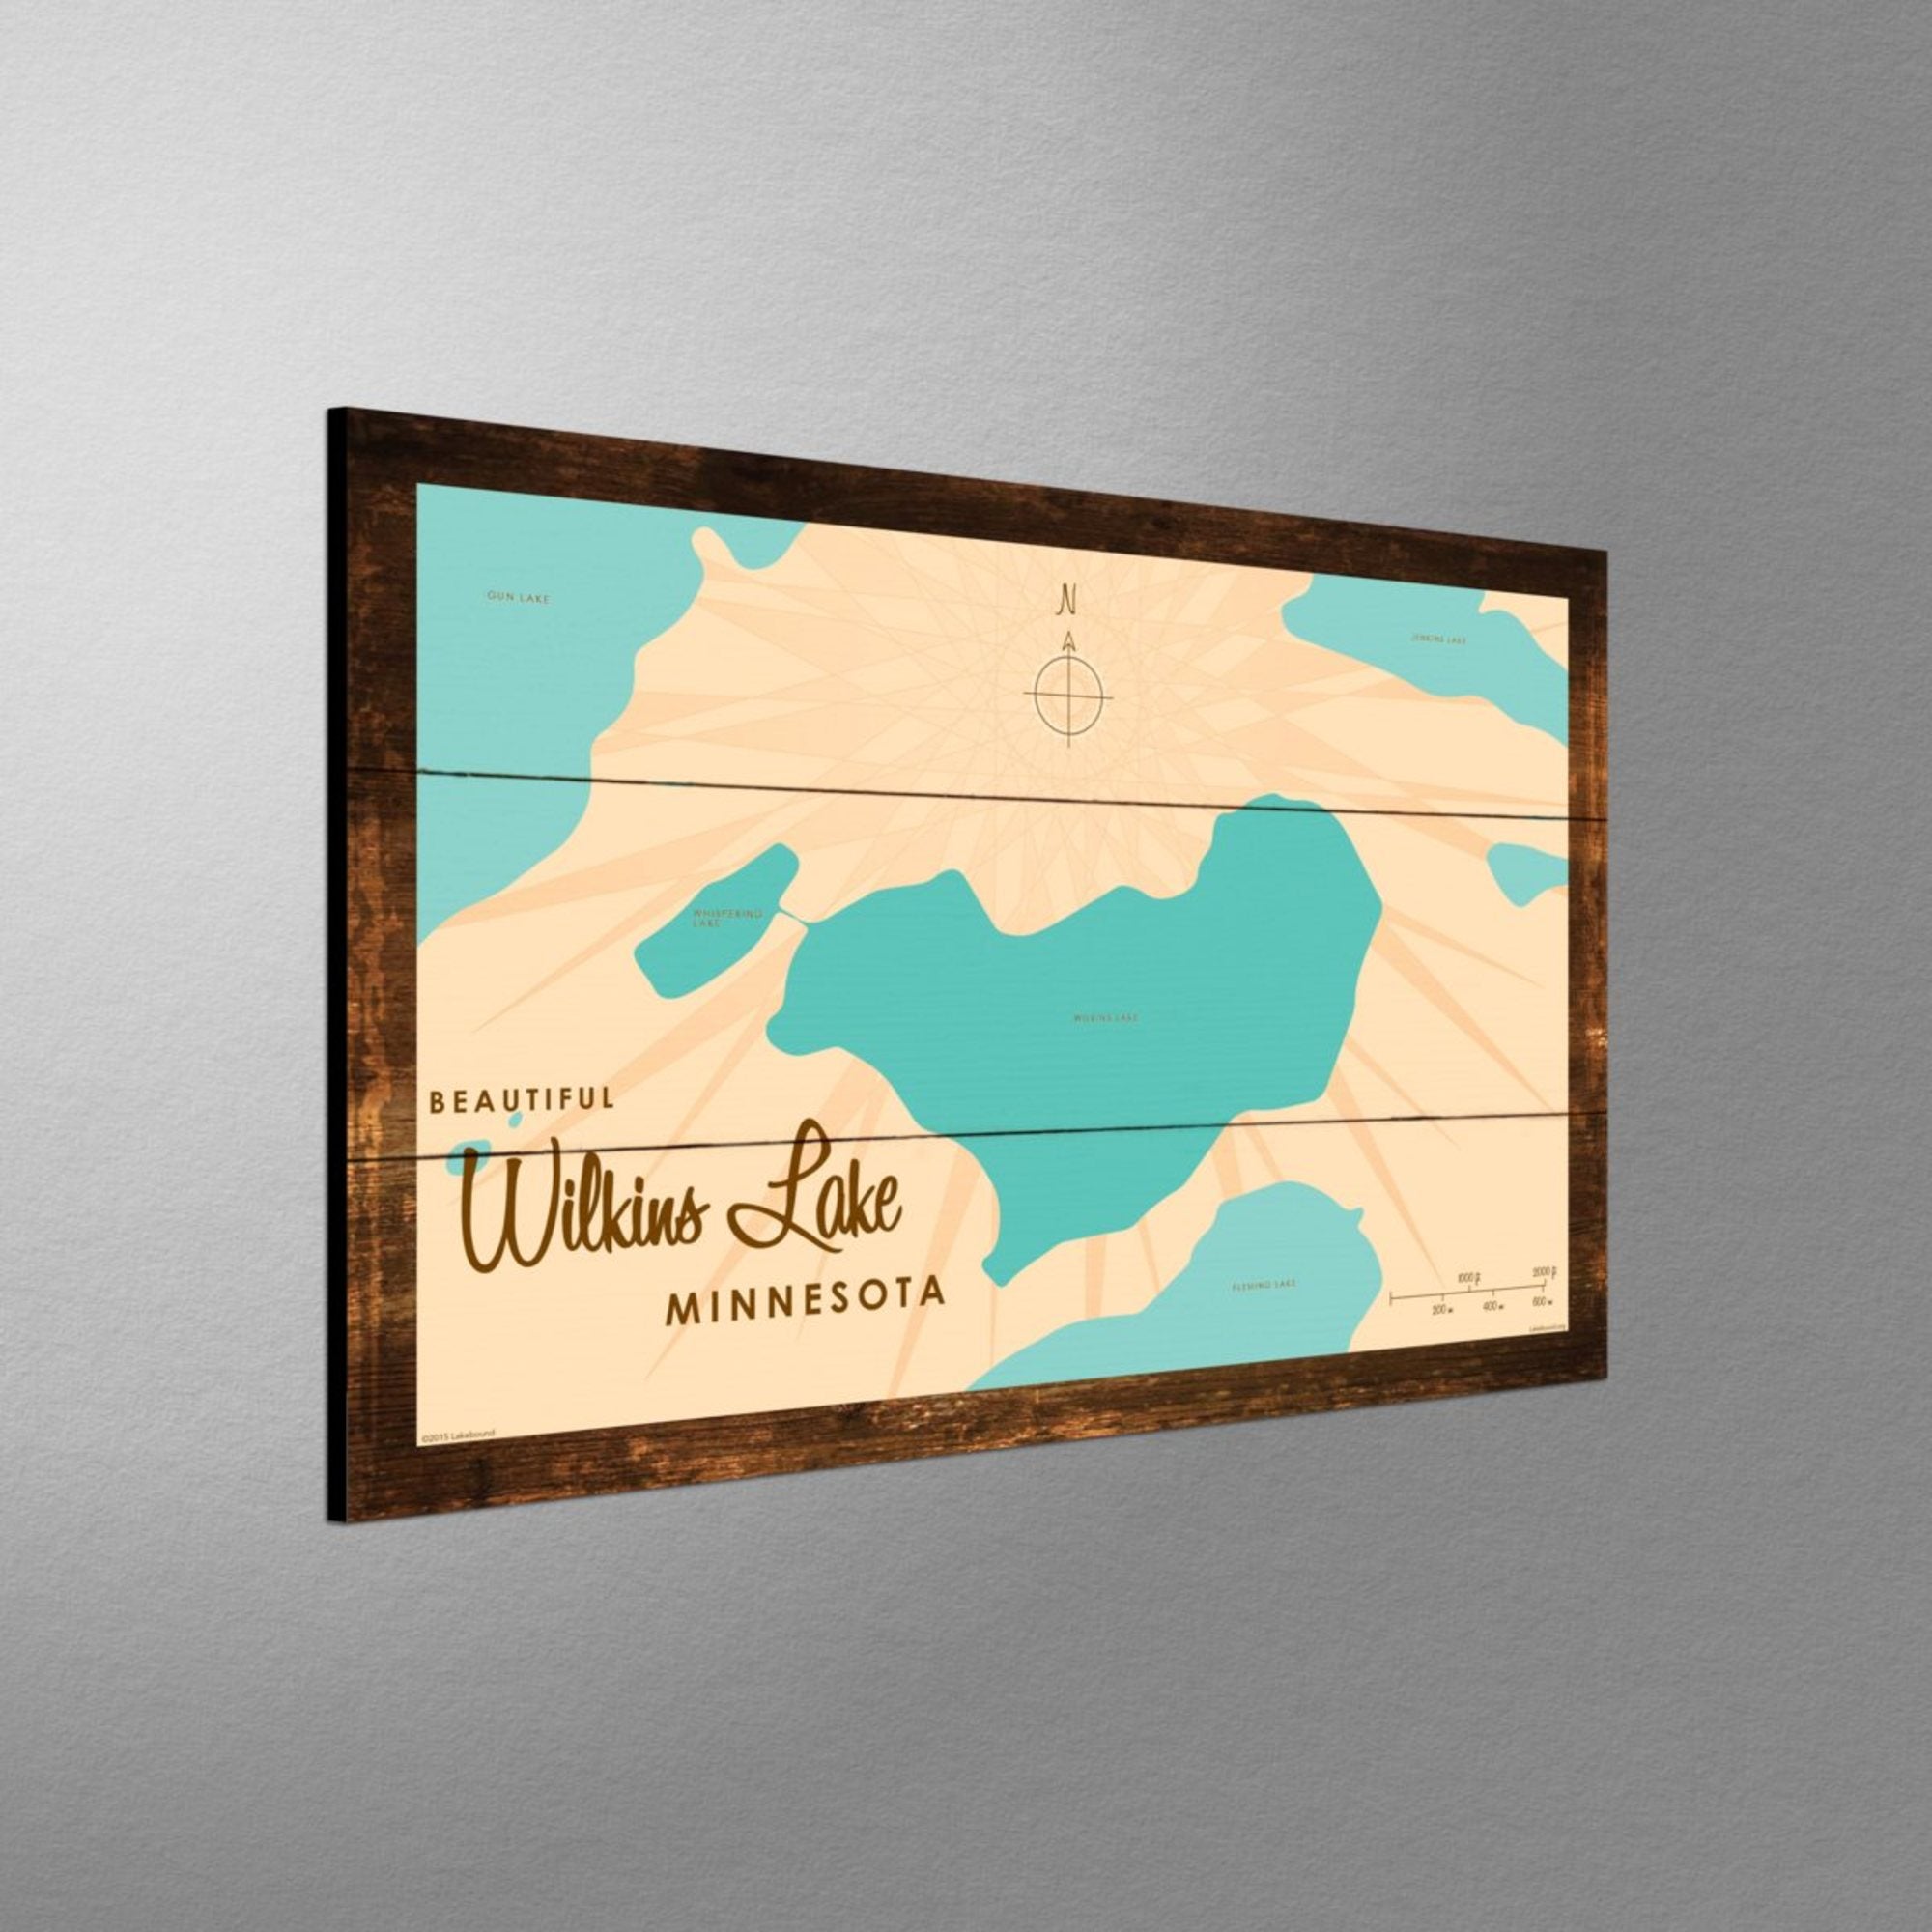 Wilkins Lake Minnesota, Rustic Wood Sign Map Art